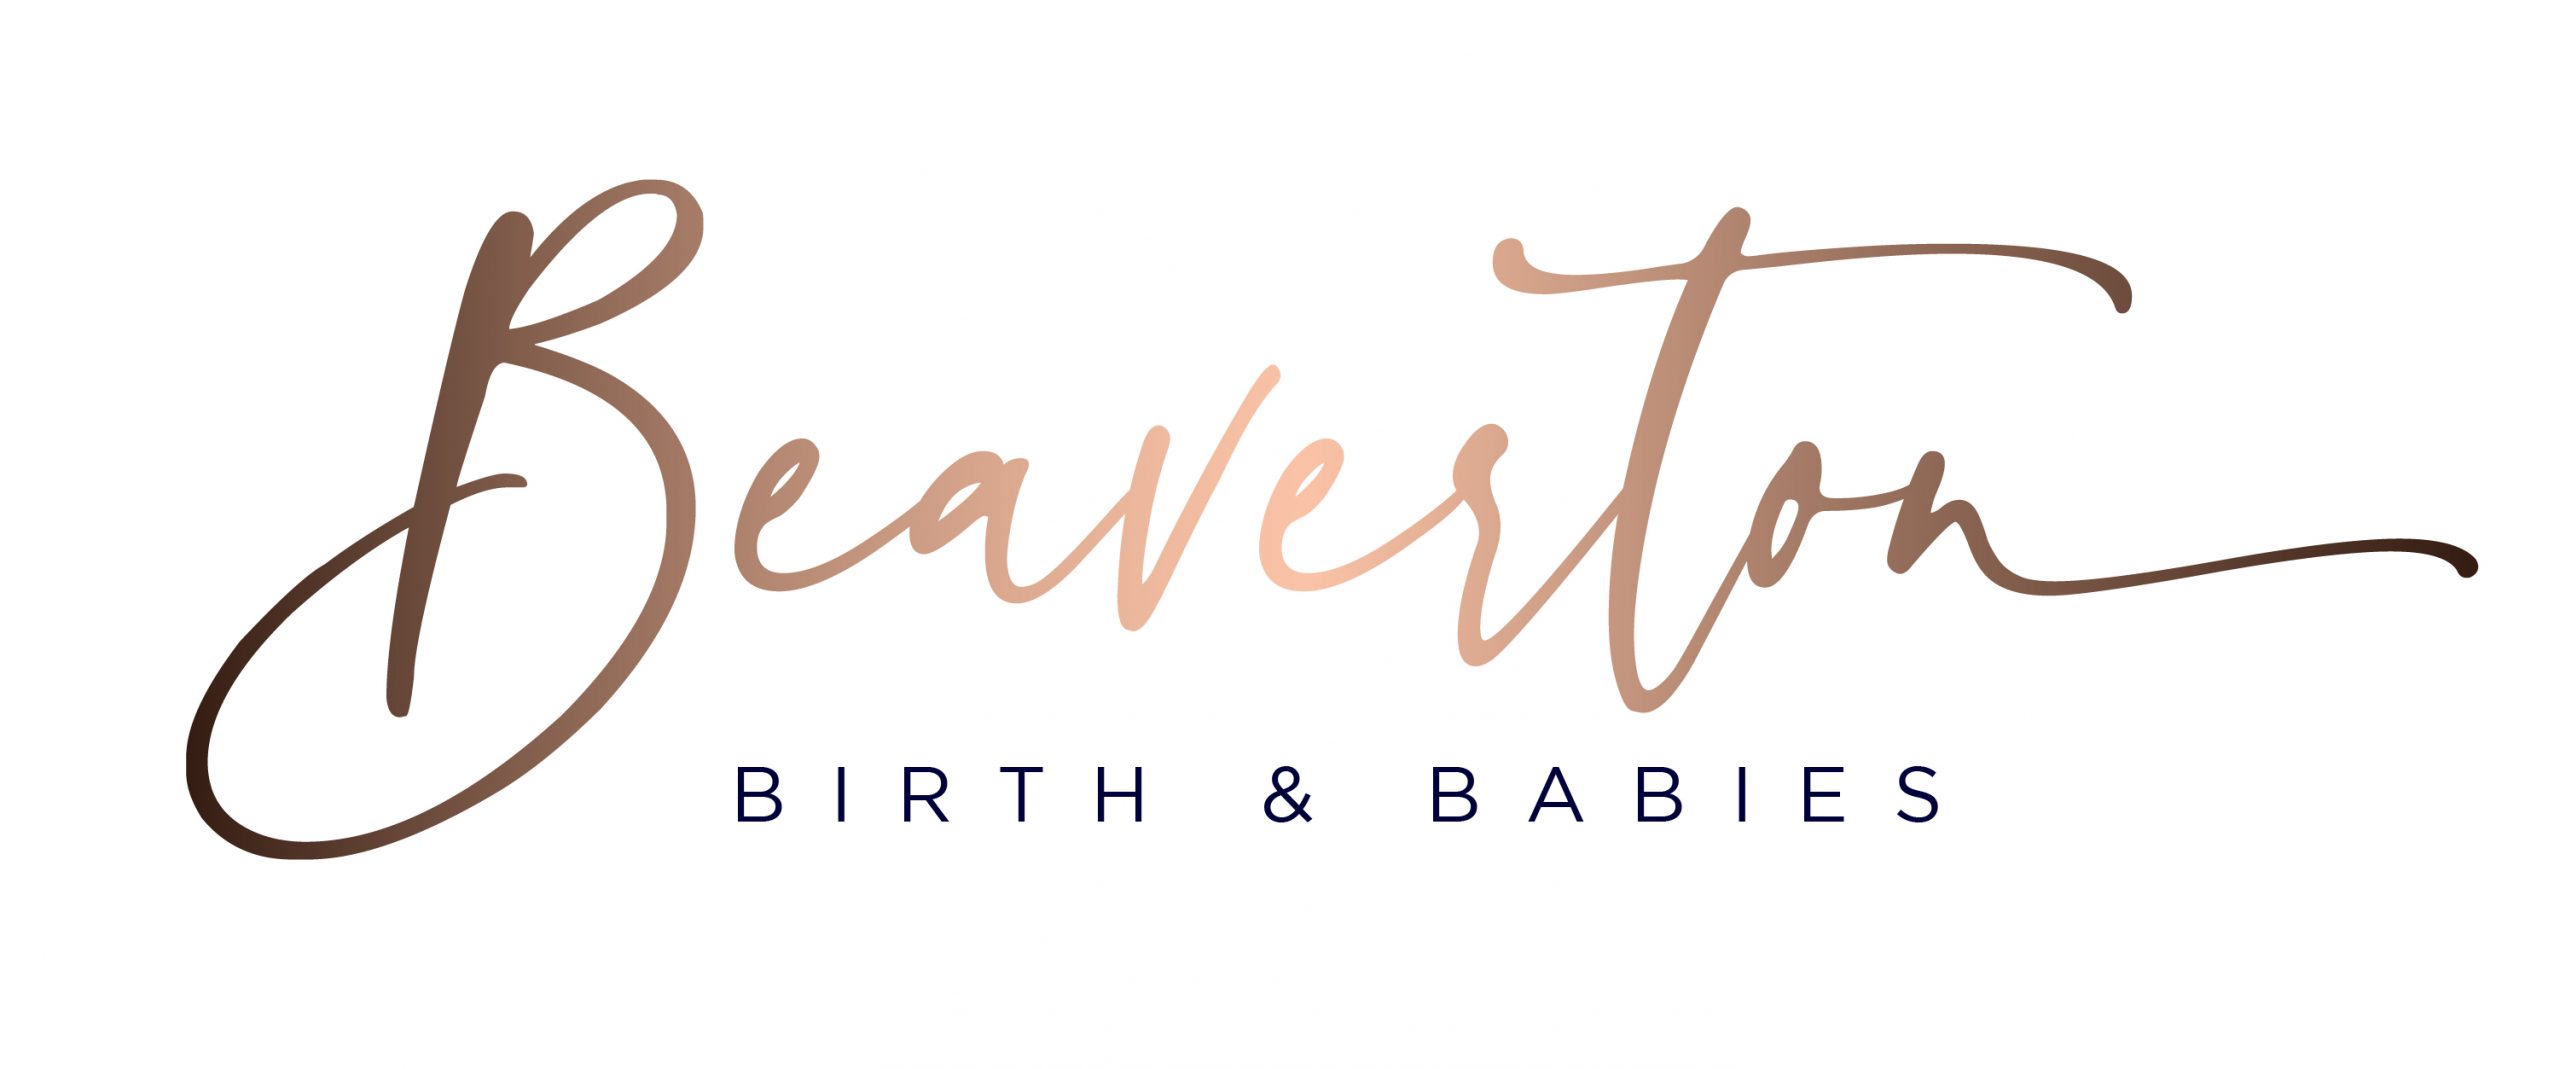 Beaverton Birth & Babies Logo